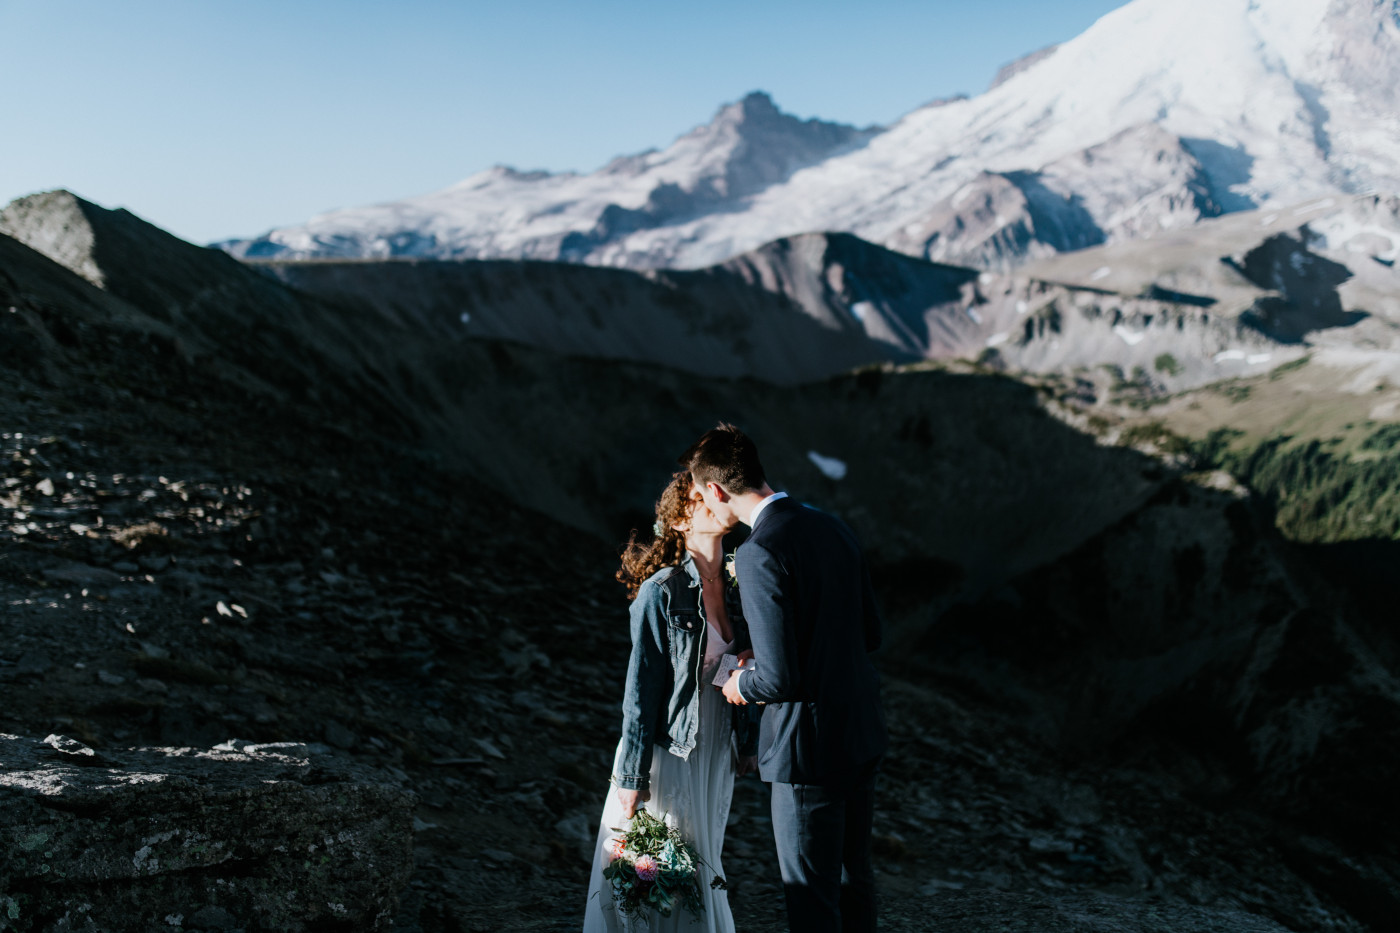 Chad and Tasha kiss. Elopement photography at Mount Rainier by Sienna Plus Josh.